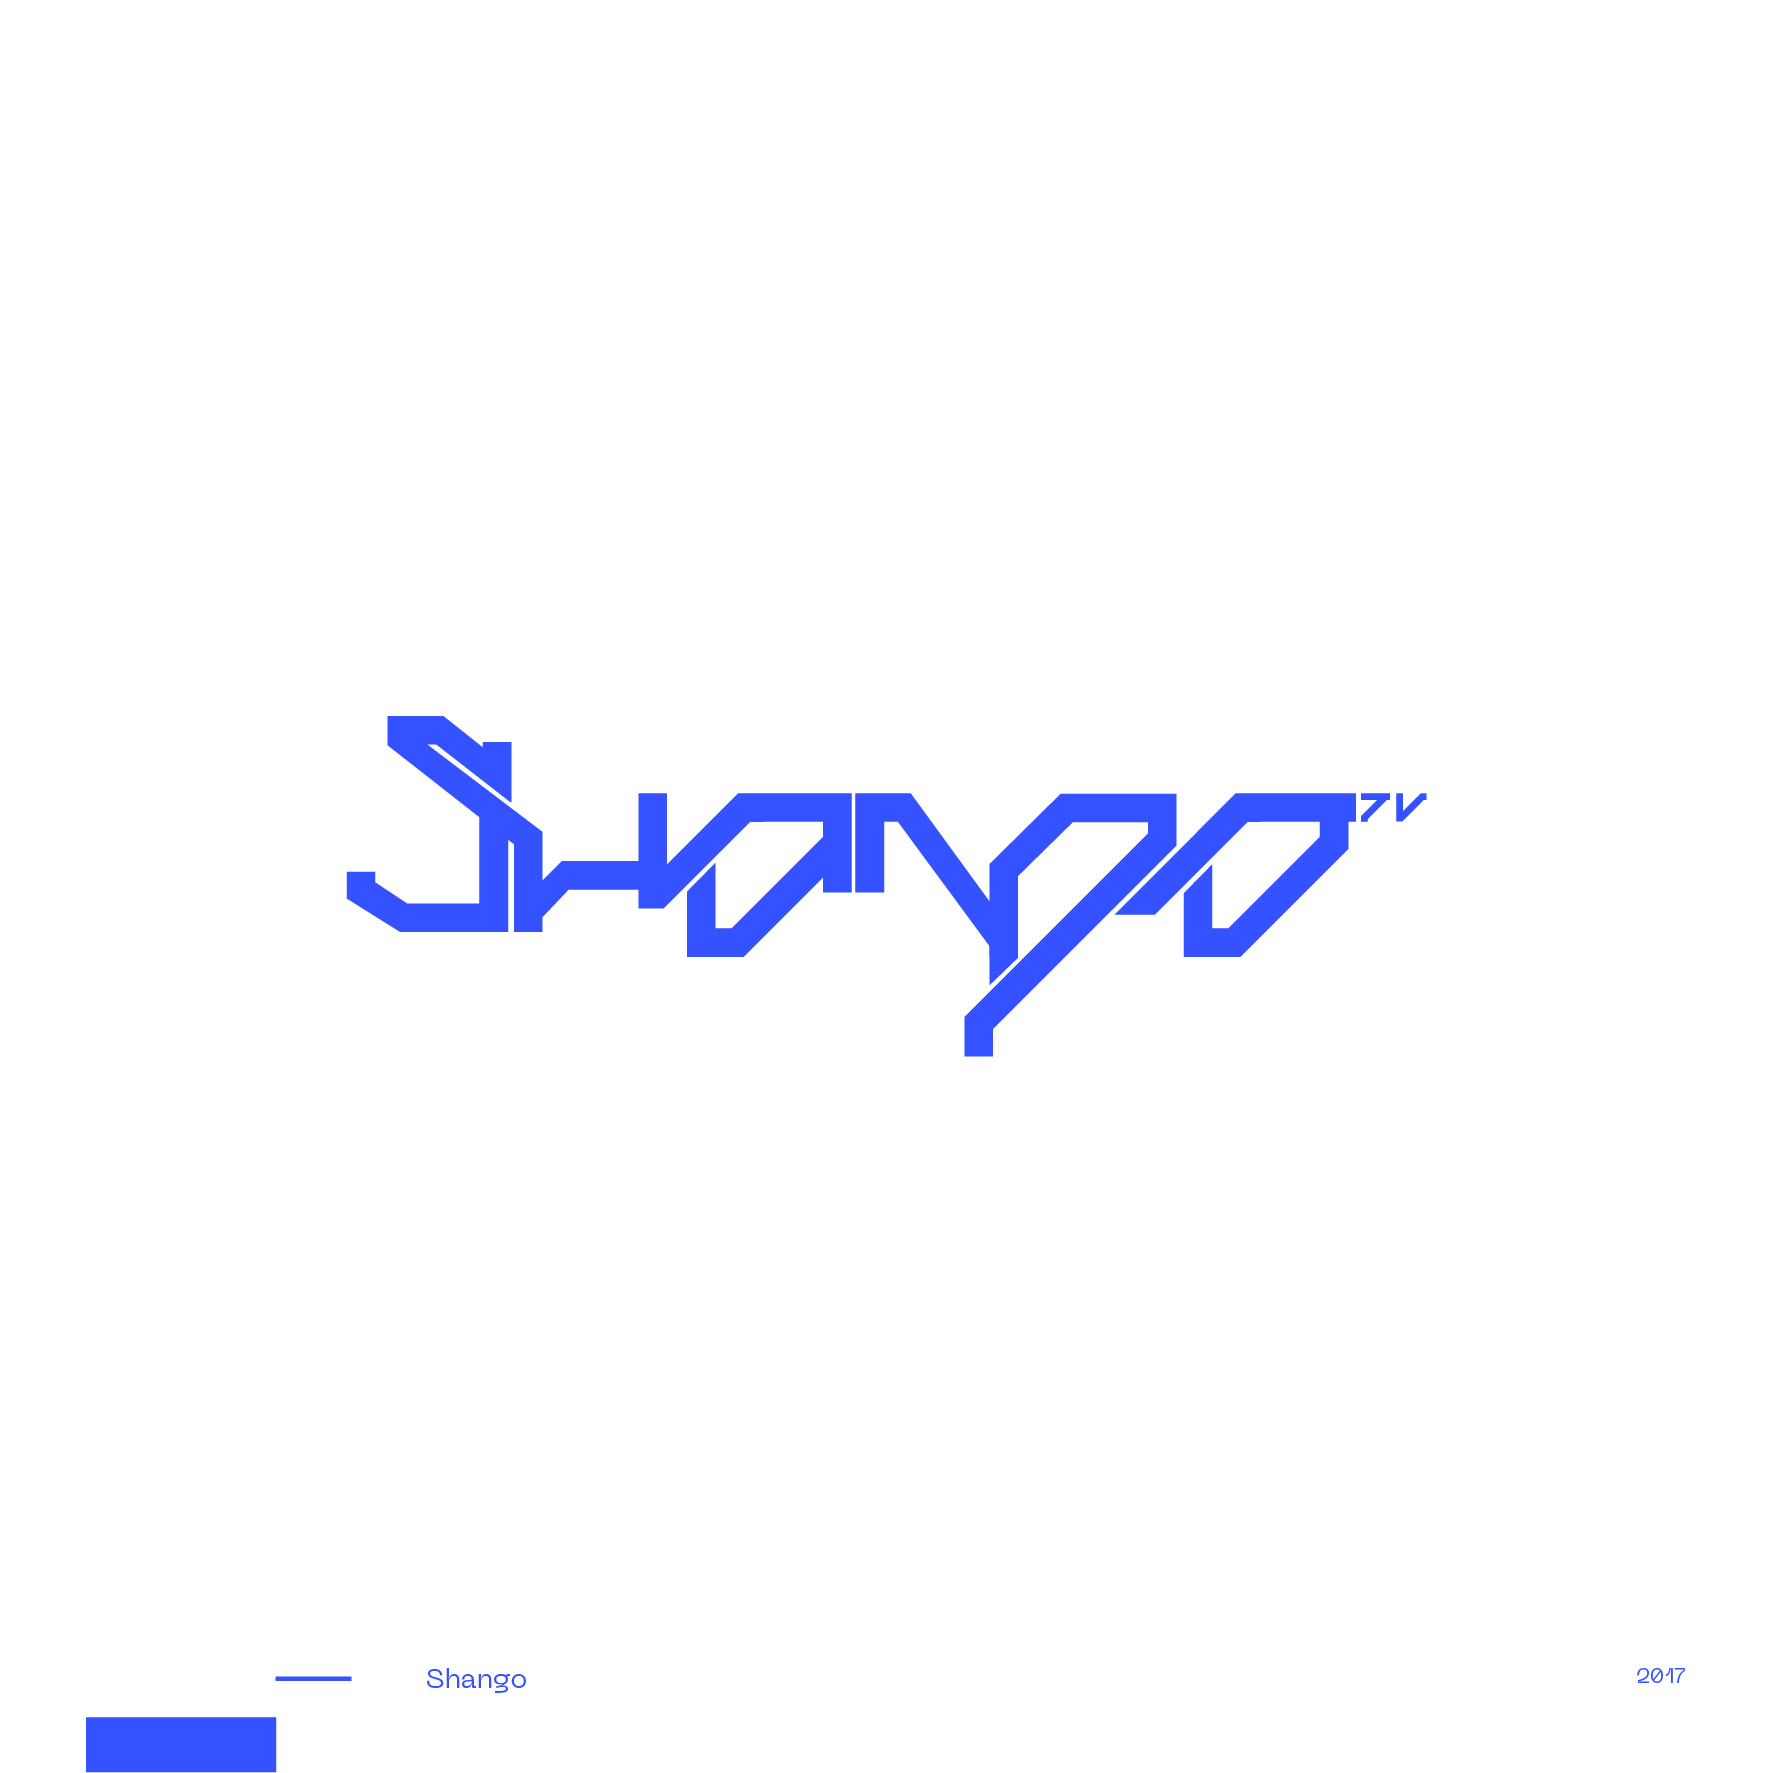 Guapo_Design_Studio_Logotype_Collection_Shango-1